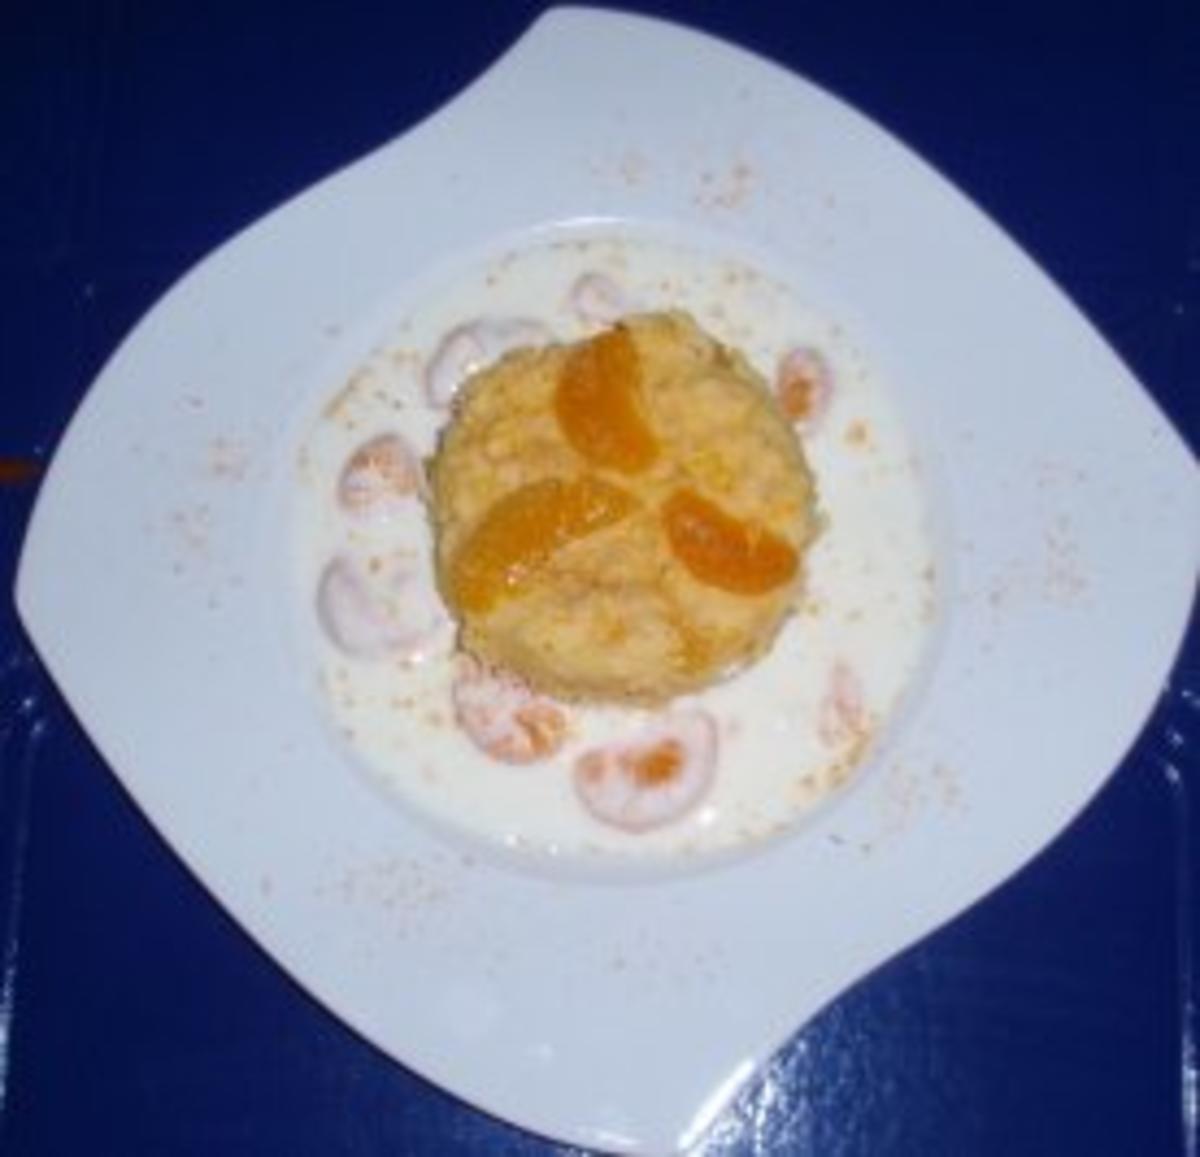 Grieß-Mandarinen-Törtchen mit einem Joghurt-Mandarinensößchen - Rezept